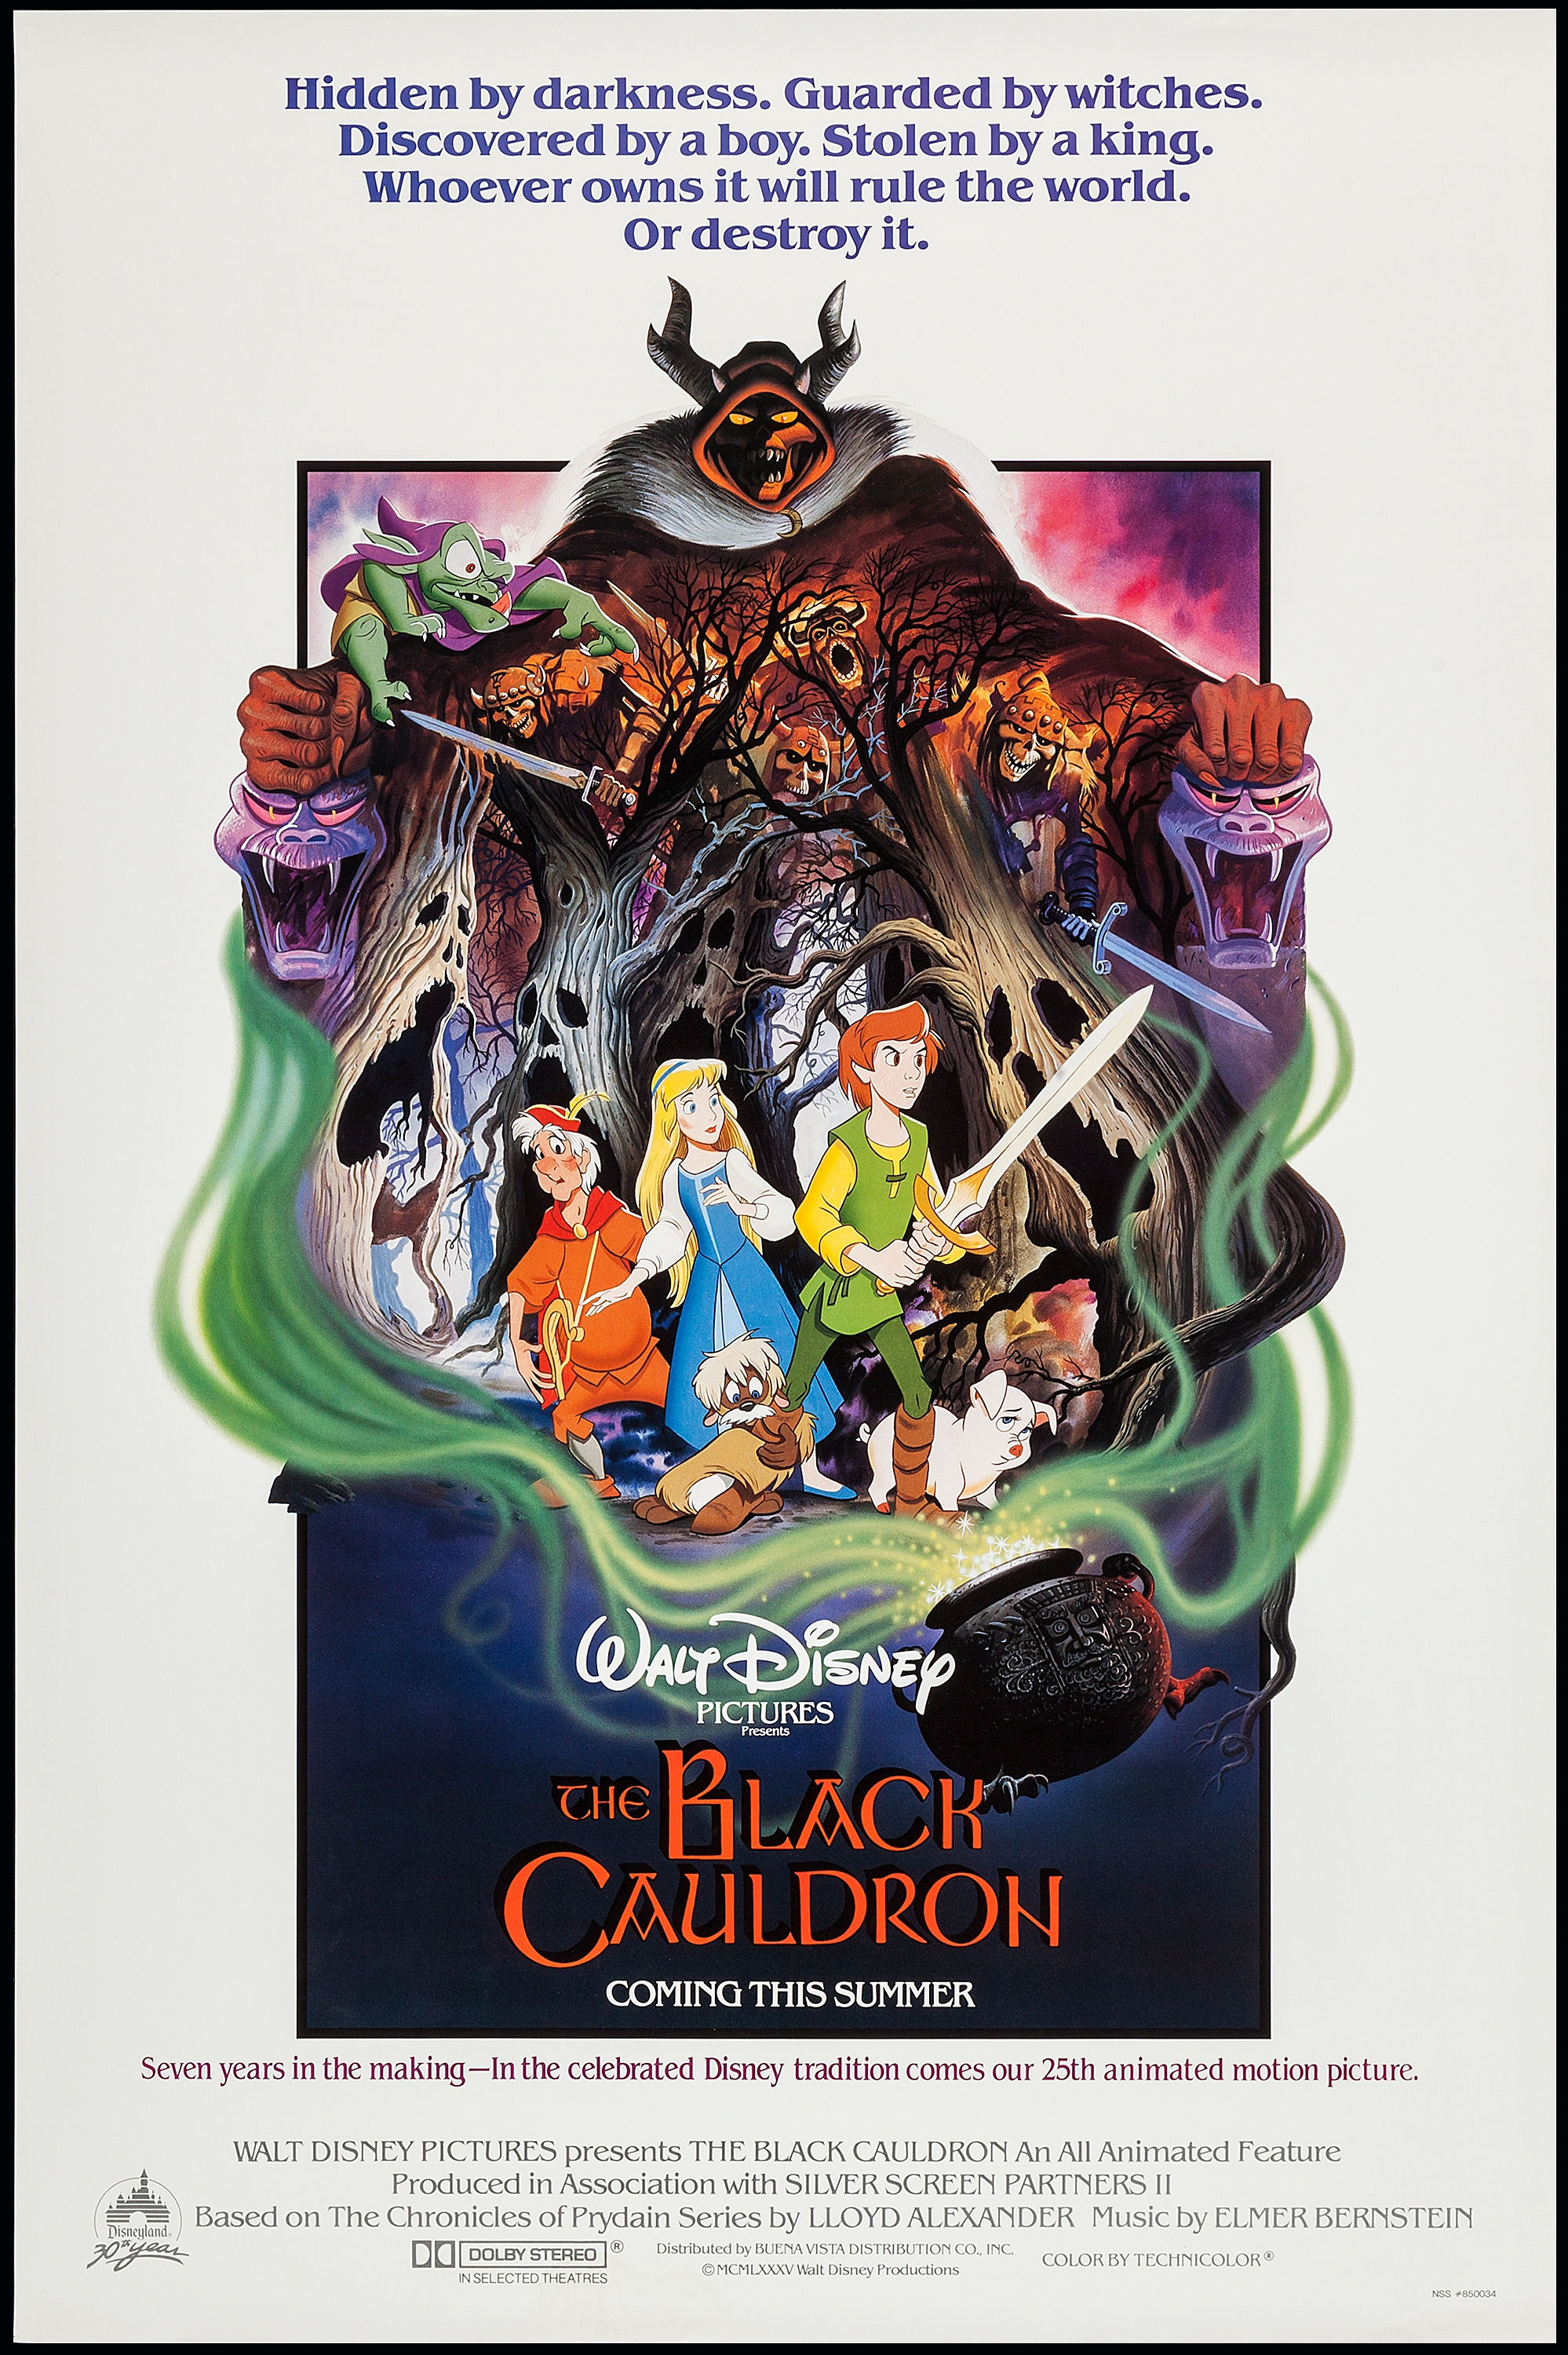 Nonton film The Black Cauldron layarkaca21 indoxx1 ganool online streaming terbaru